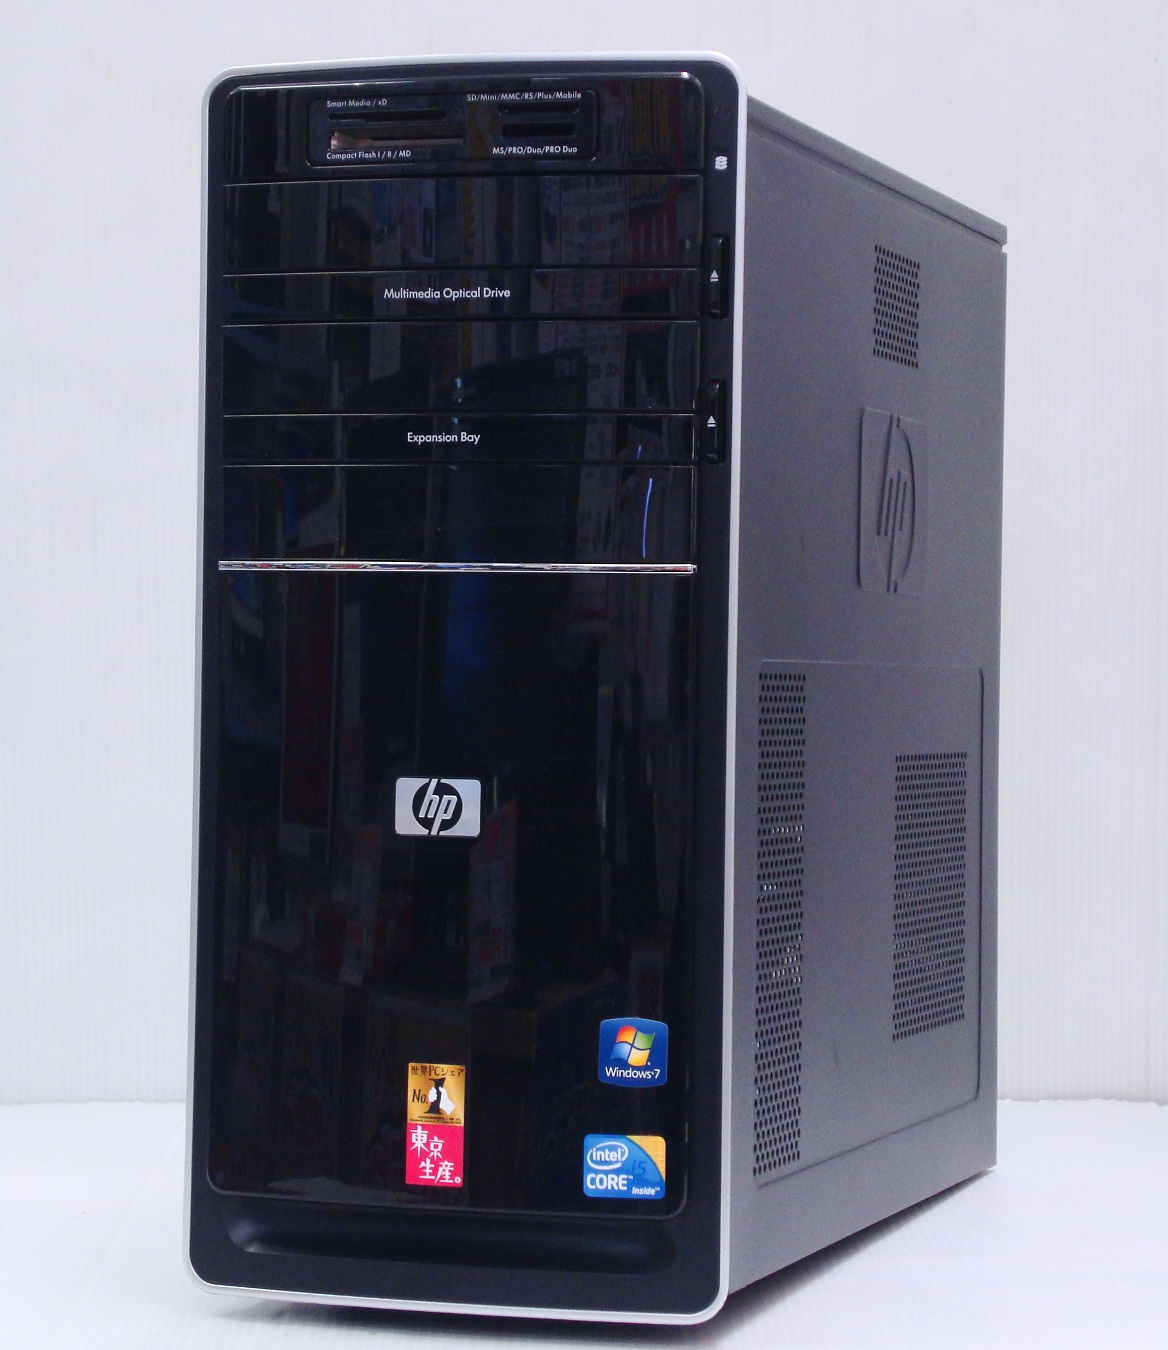 HP Pavilion P6000 CPU:Corei5 650 3.20GHz / メモリ:8GB / HDD:500GB